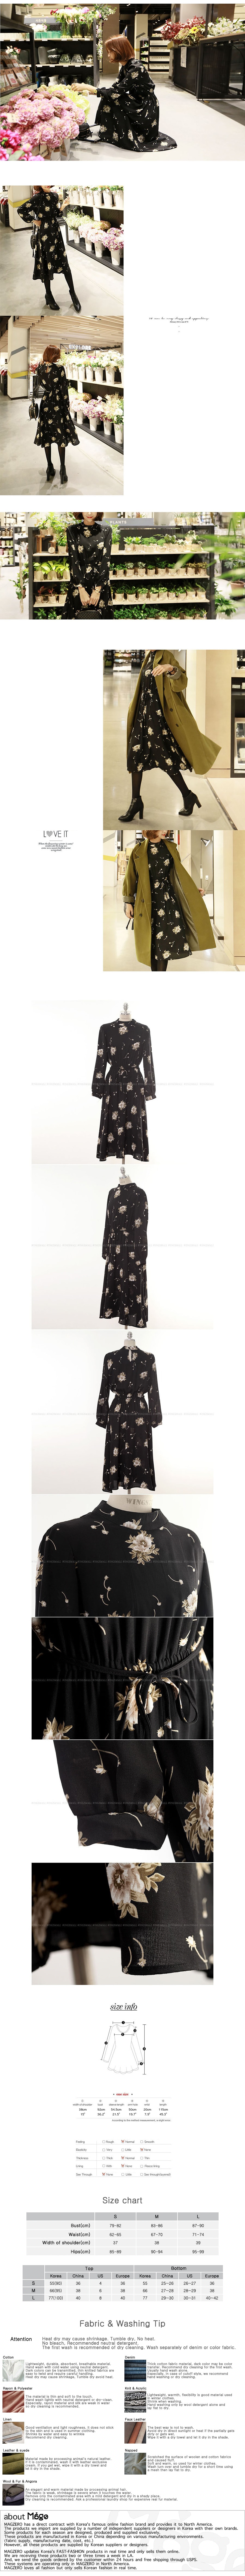 MAGZERO [限量销售] 印花图案修身长裙 #黑色 均码(S-M)